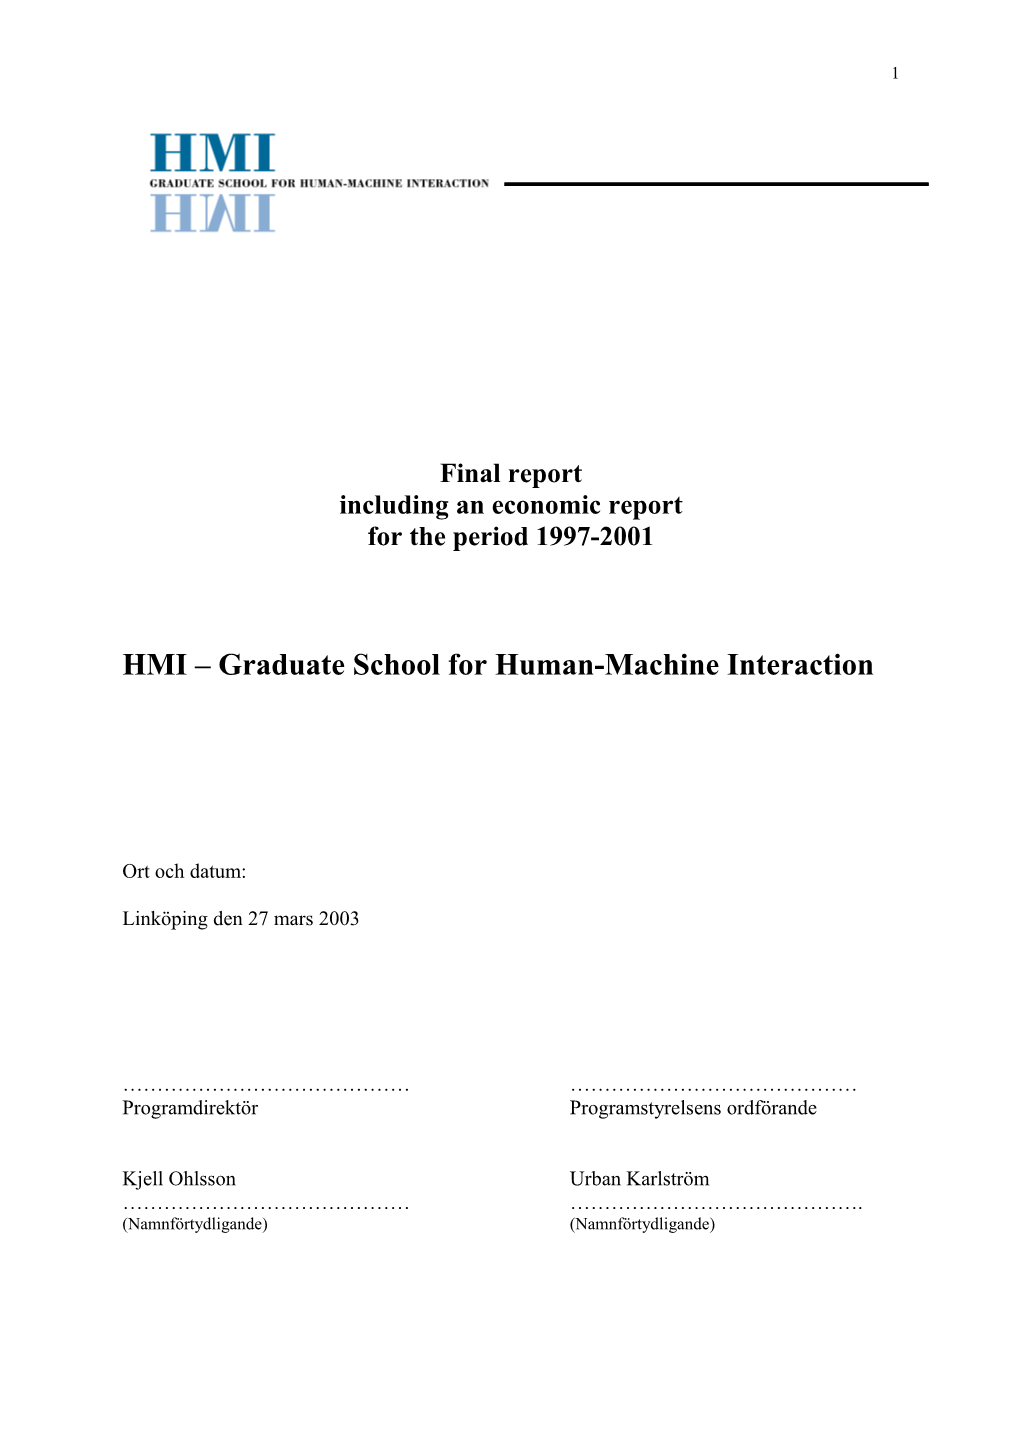 Final Report for the Human Machine Interaction (HMI) Graduate School